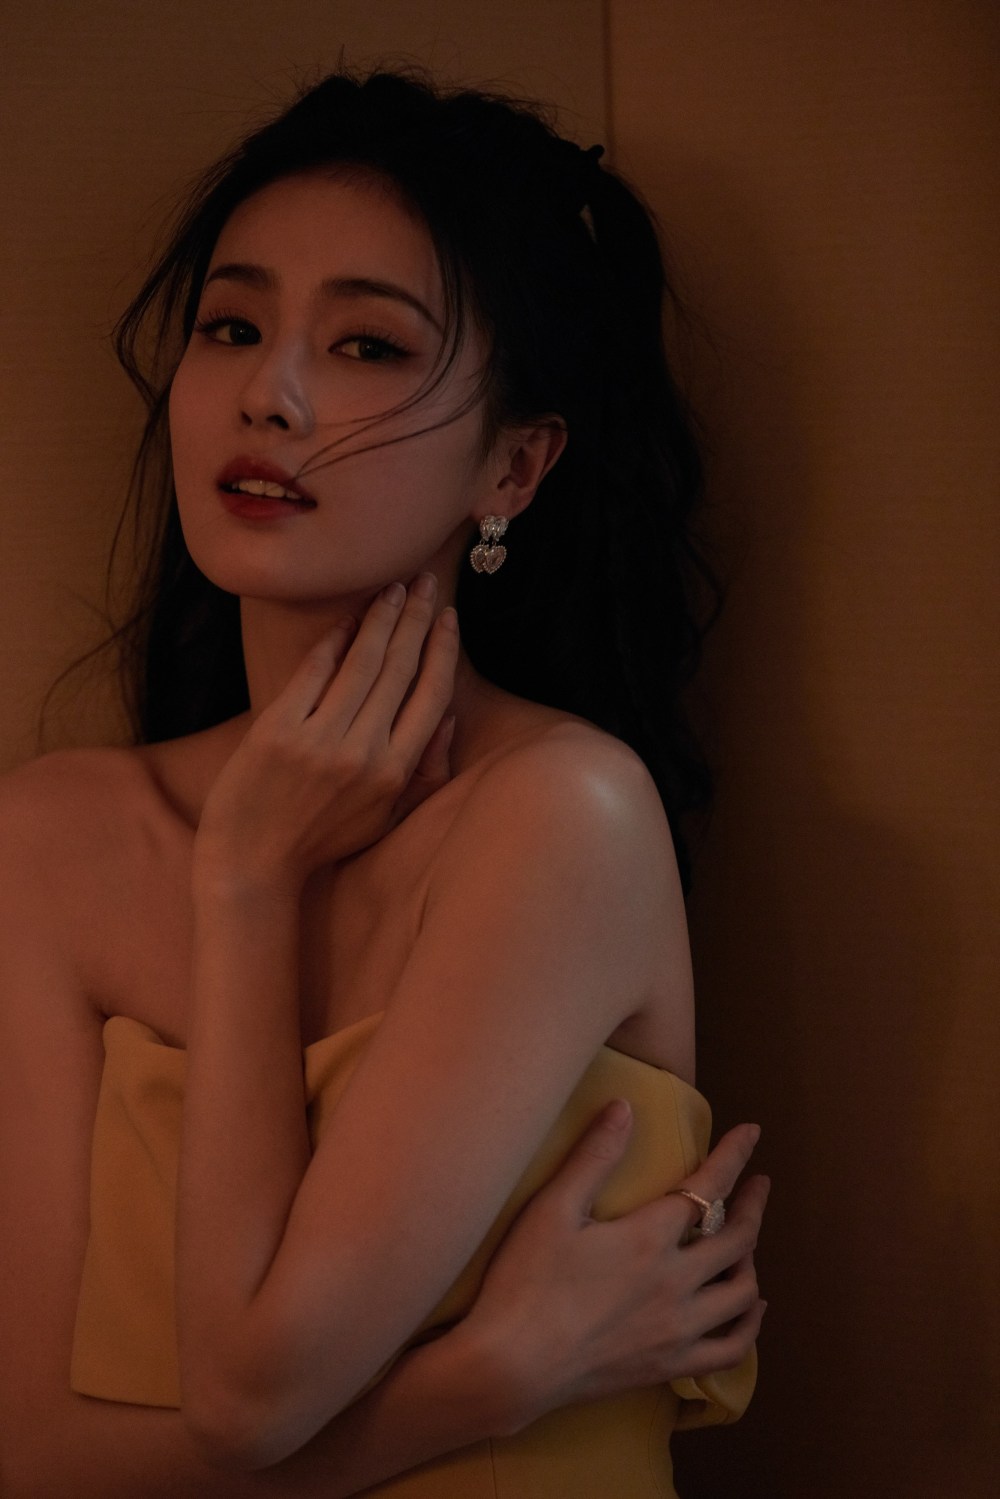 Lu Bai Sexy and Hottest Photos , Latest Pics